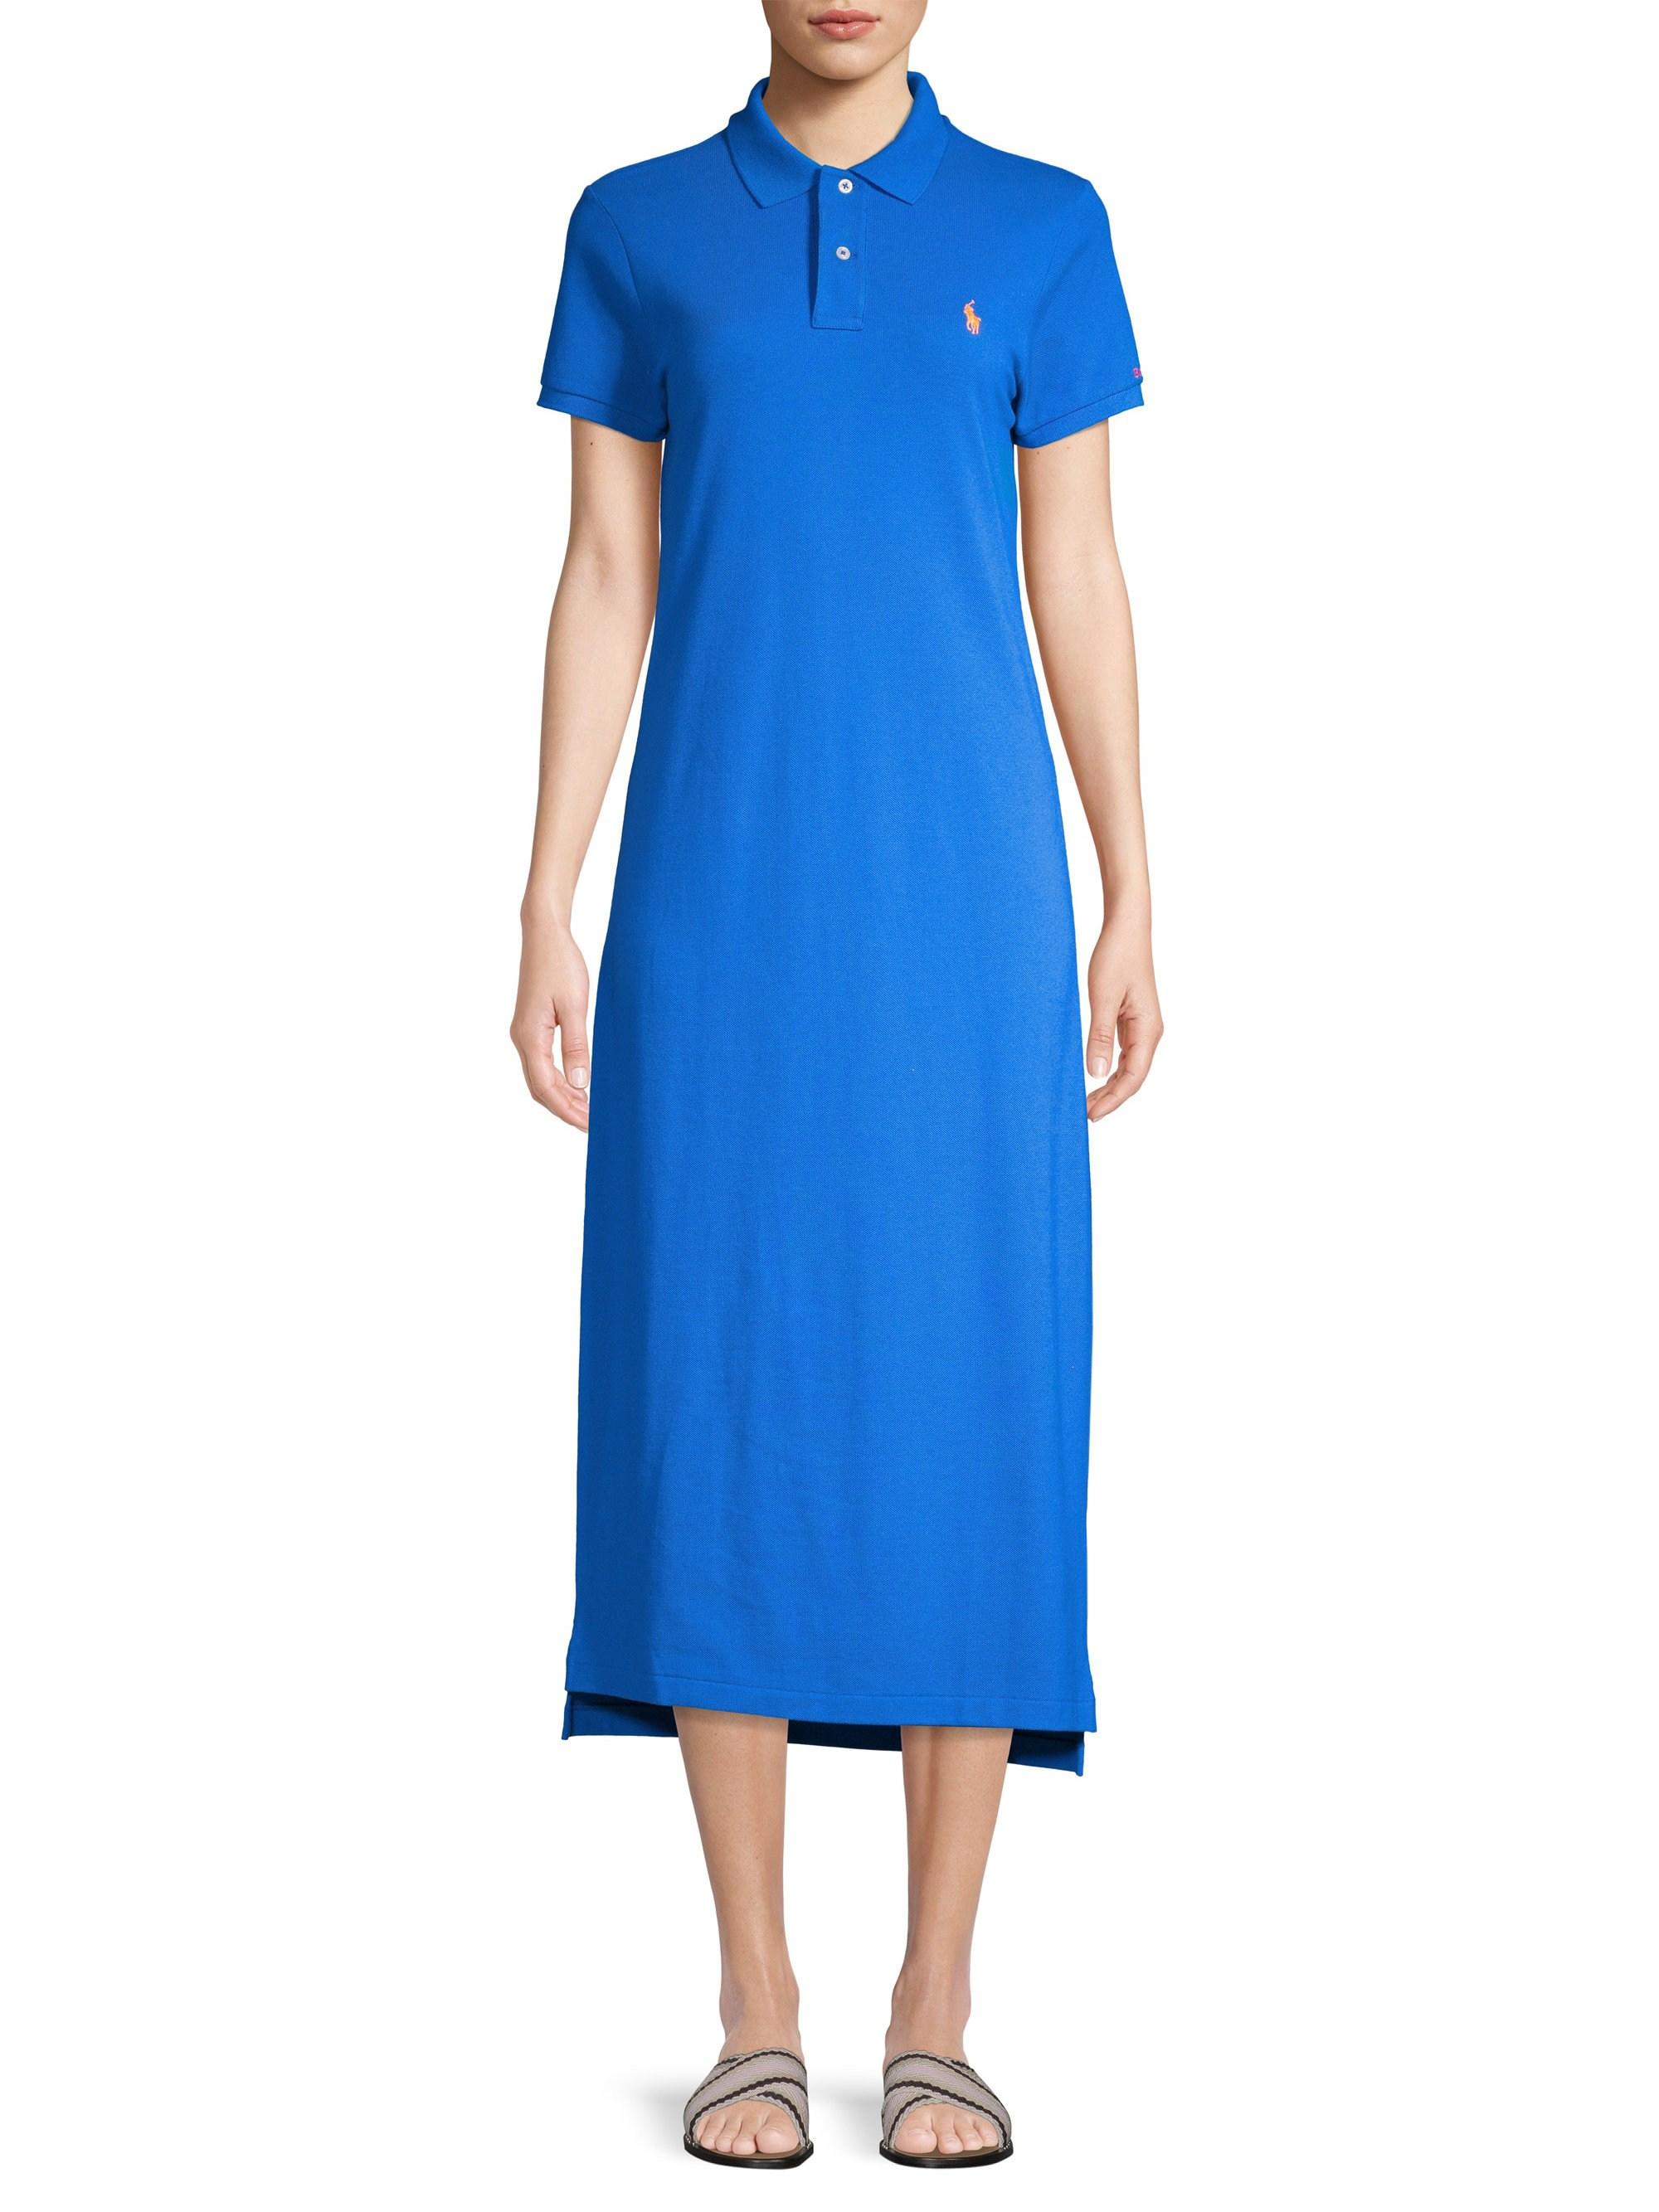 Polo Ralph Lauren Blue Dress With A Polo Collar | Lyst